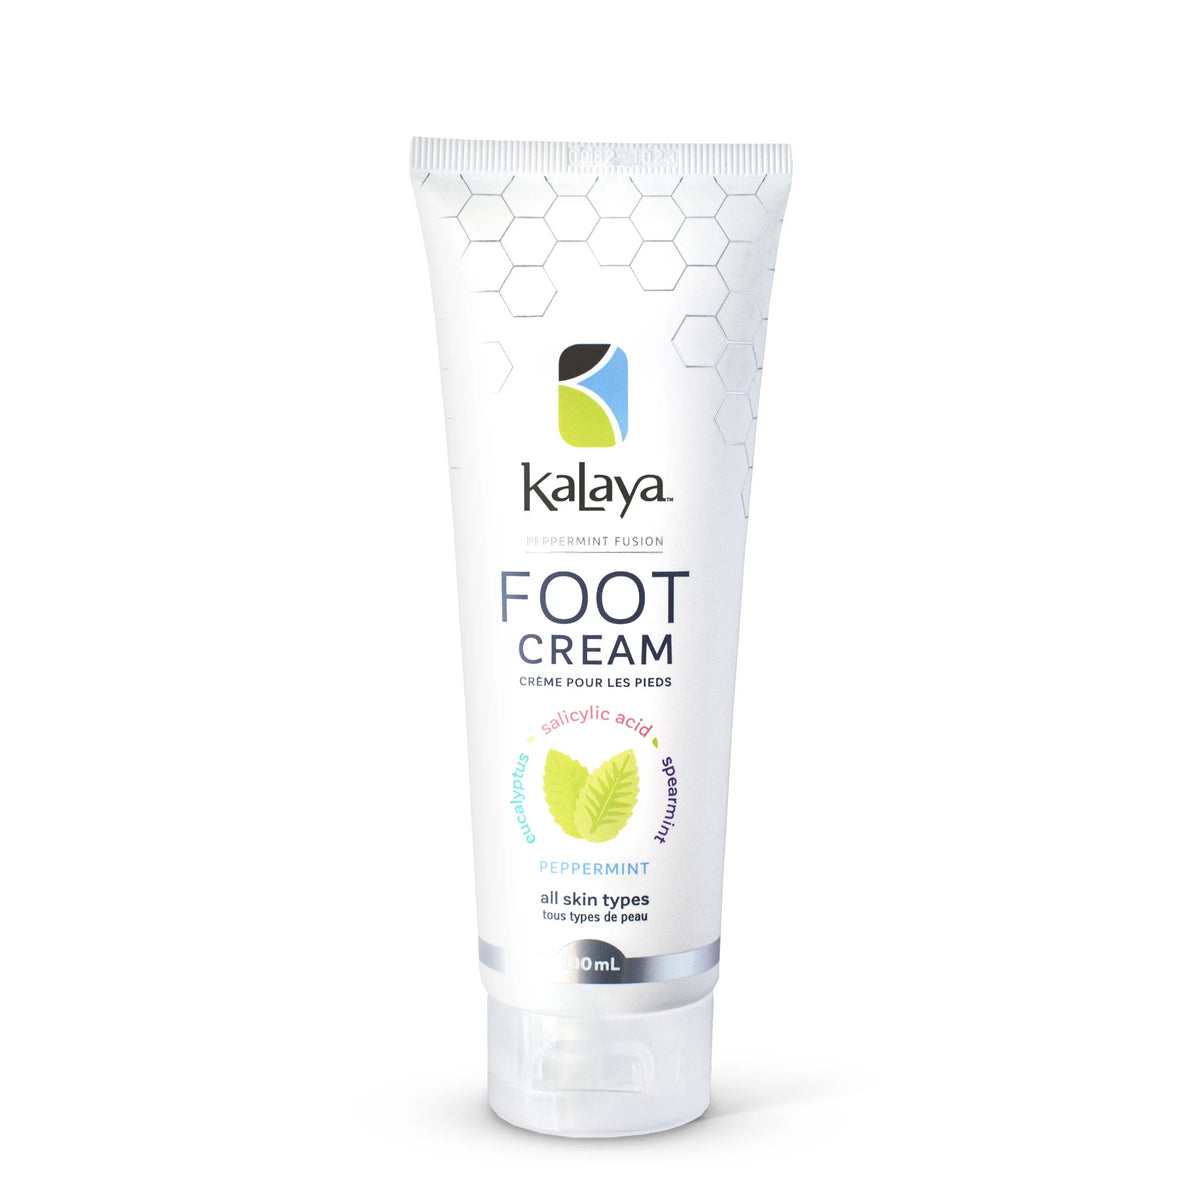 KaLaya Foot Cream 3.38 fl oz (100mL)